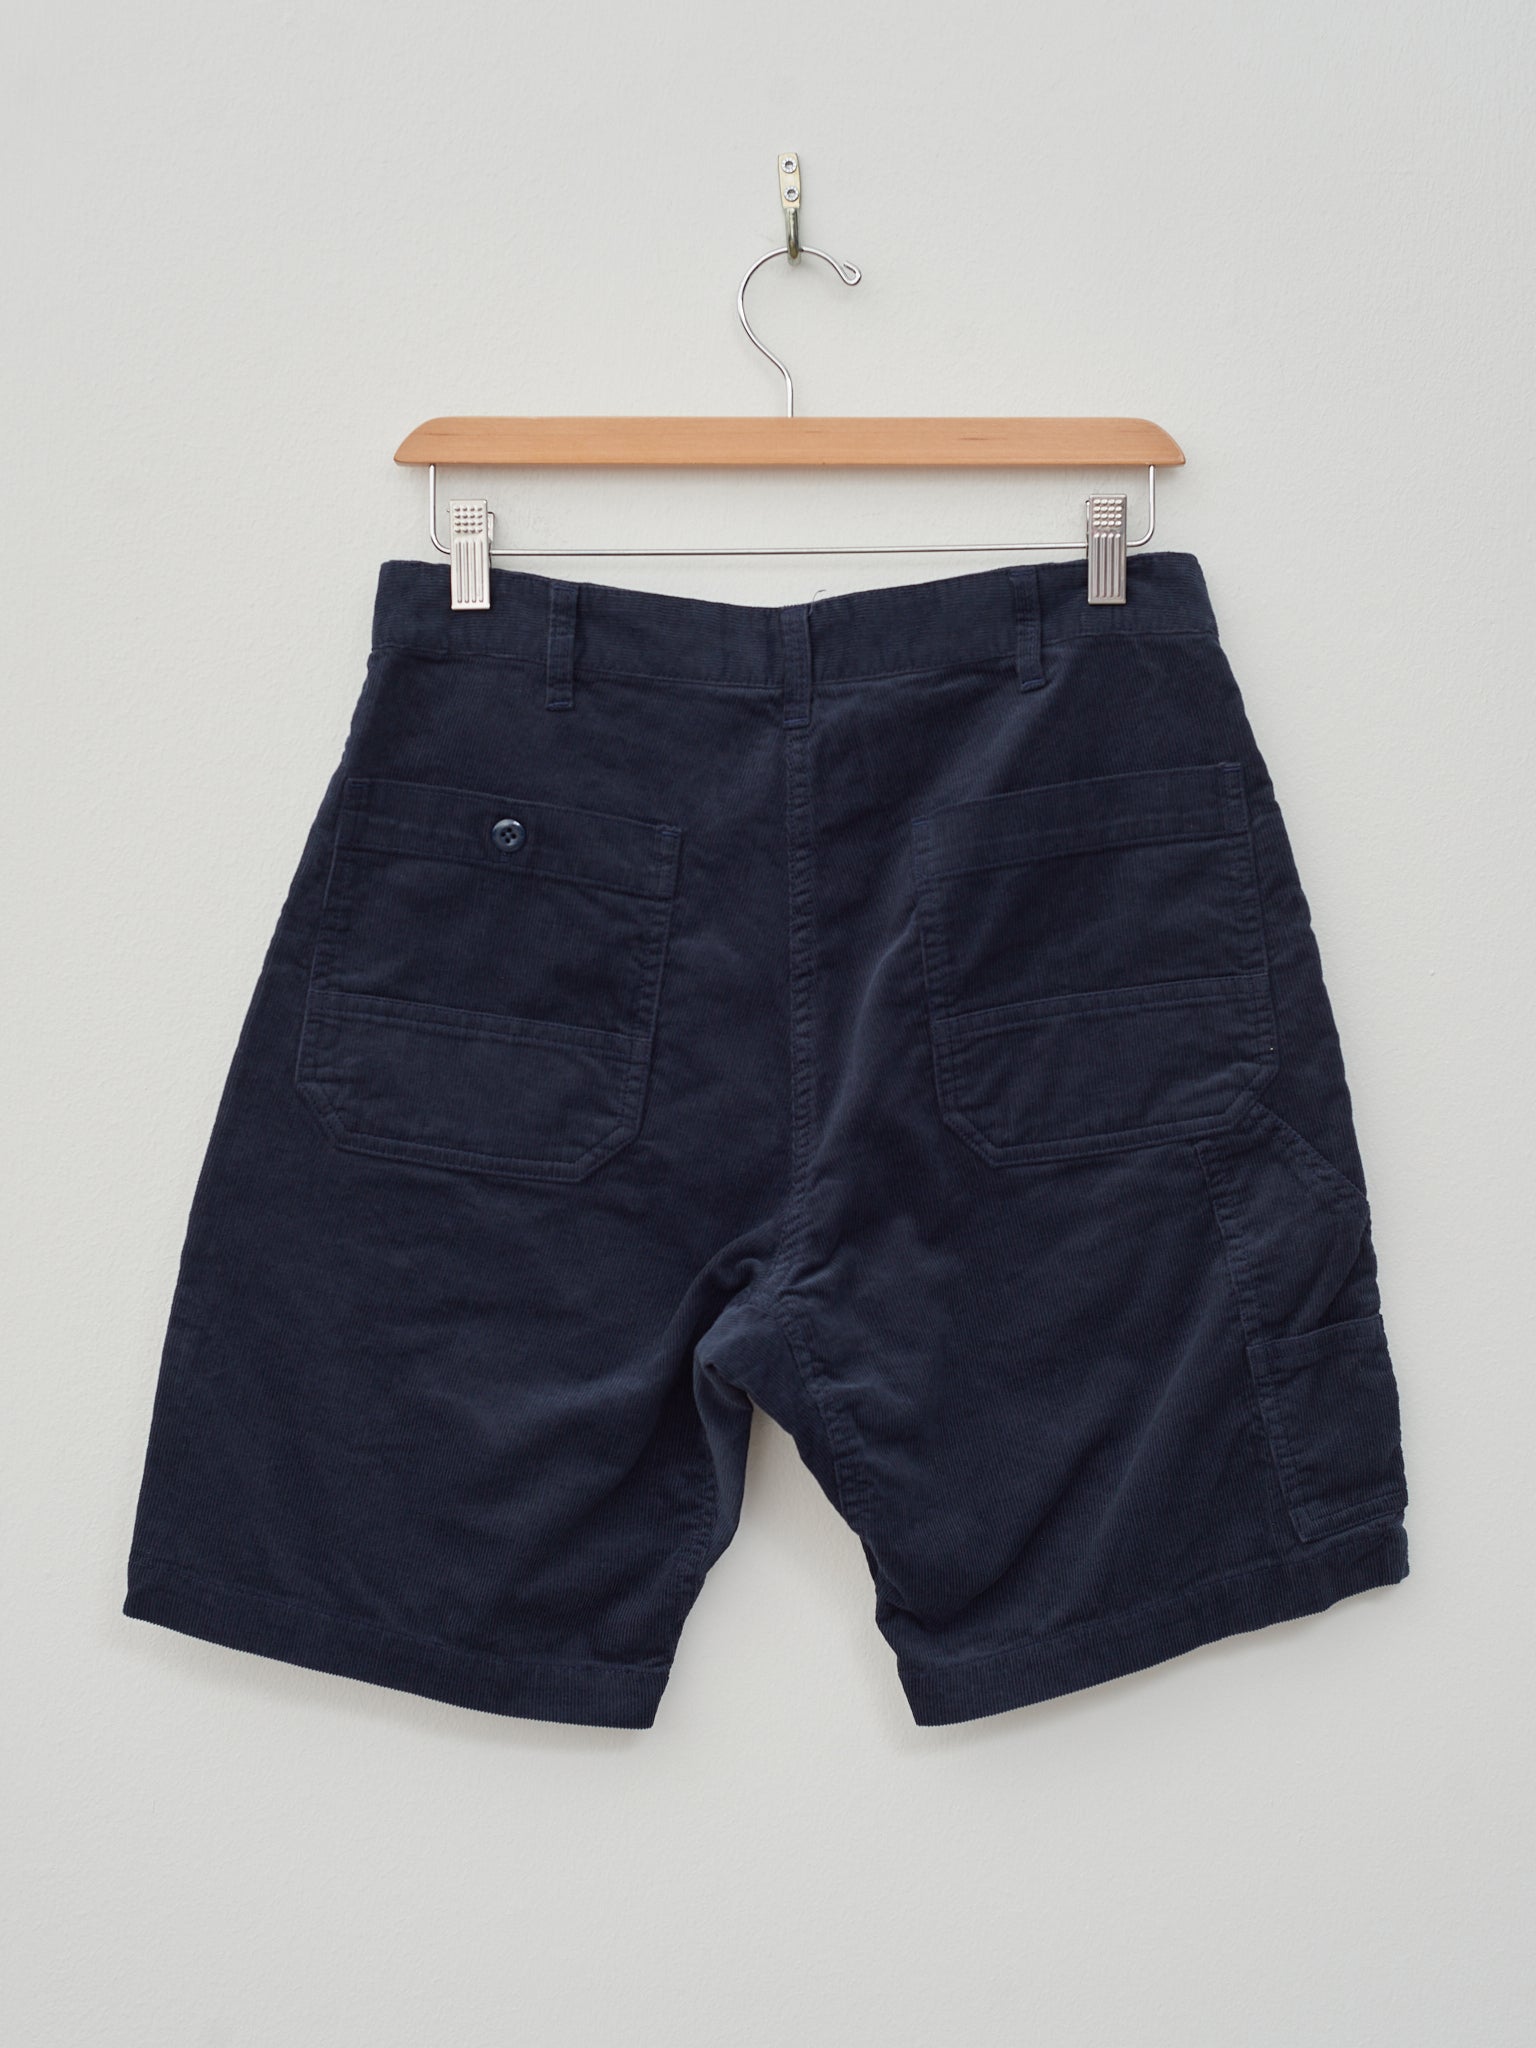 Namu Shop - Fujito Explorer Shorts - Navy